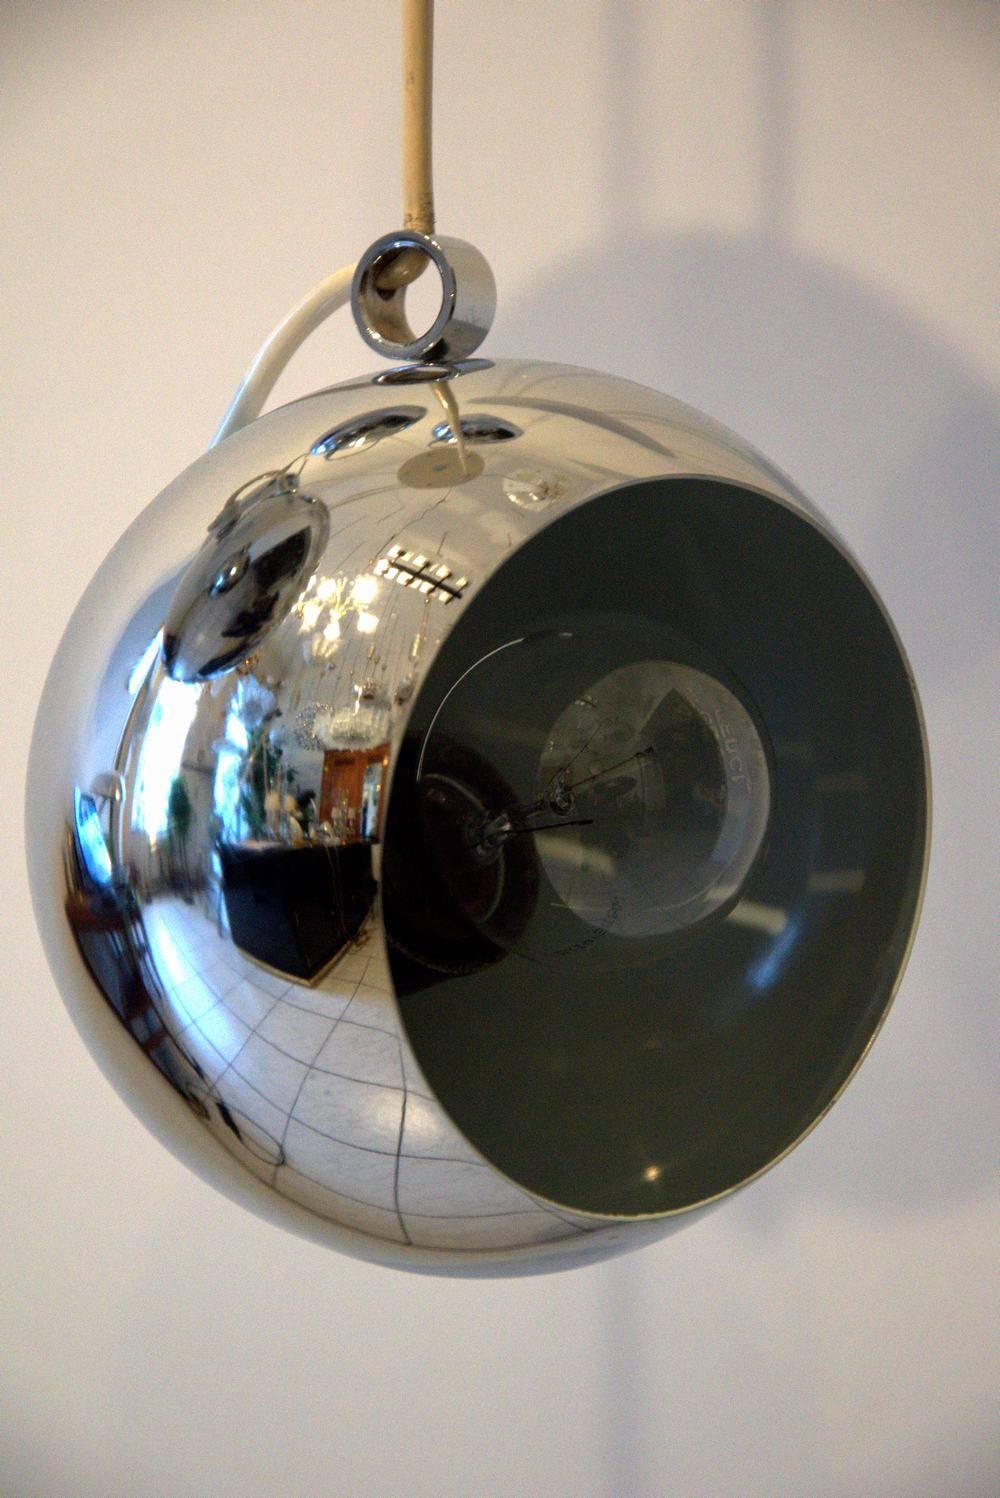 Harvey Guzzini Italian Five Chrome Globe um 1965
Letztes Bild ist ein Originalbild
Ursprünglicher Zustand.